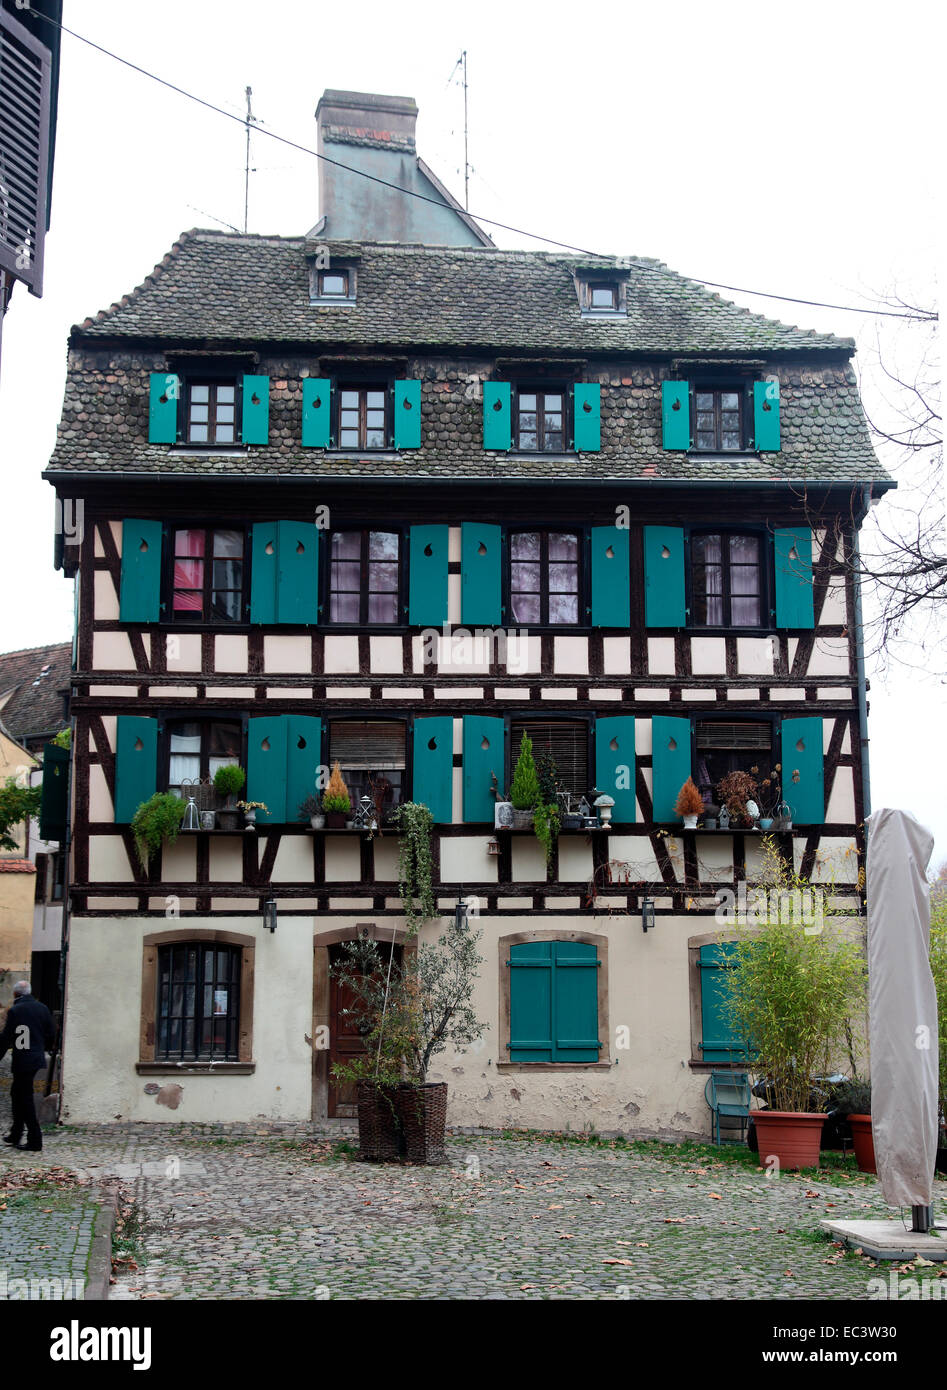 Strasbourg medieval halftimbered house. Stock Photo